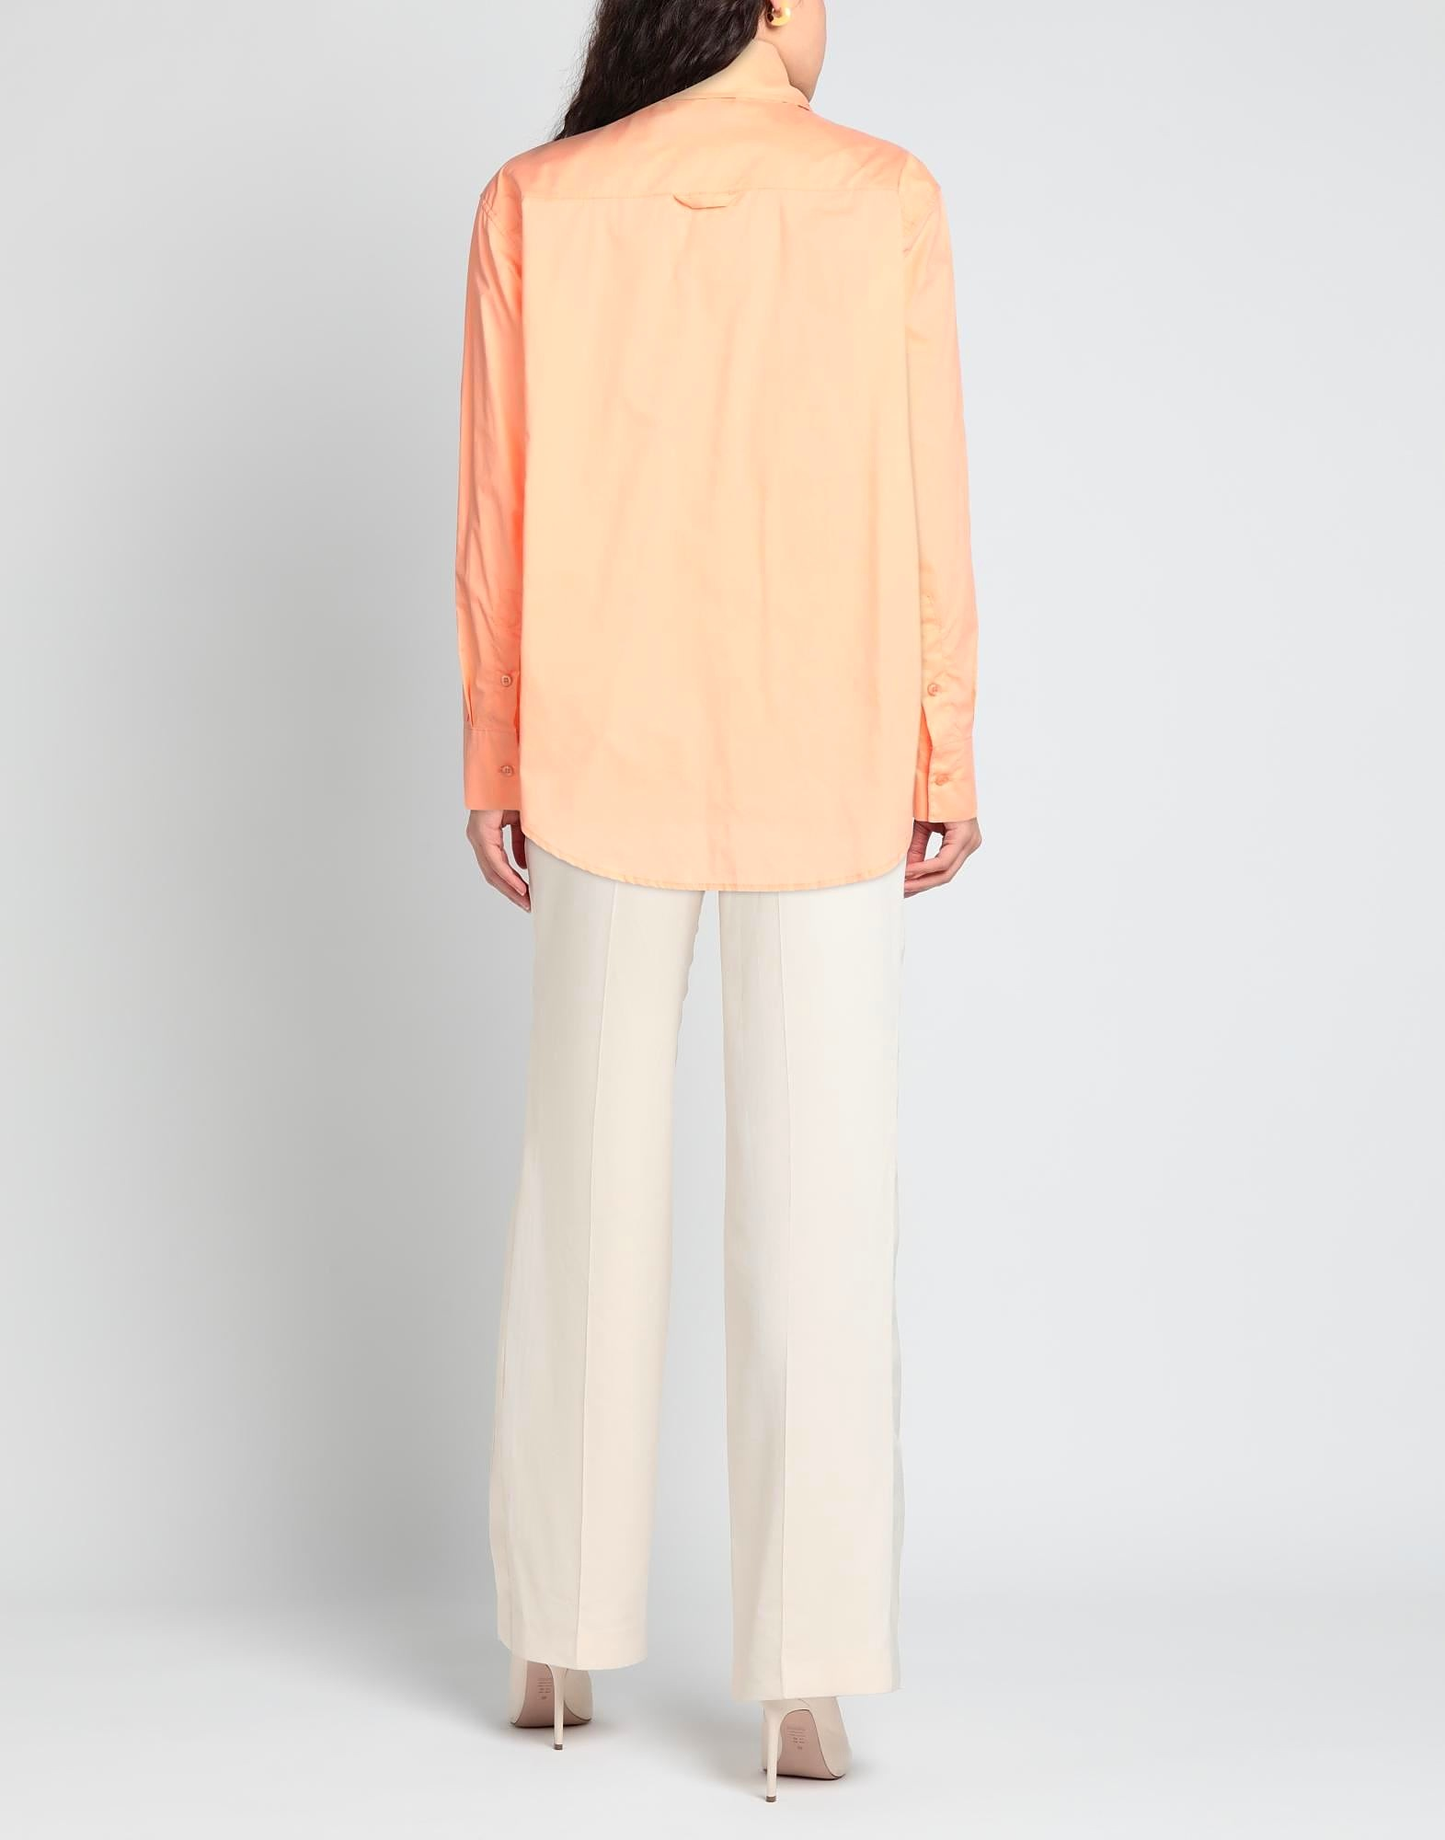 PARIOLI SHIRTS  - PARIOLI Women -Collection - Solid color Shirts & Blouses